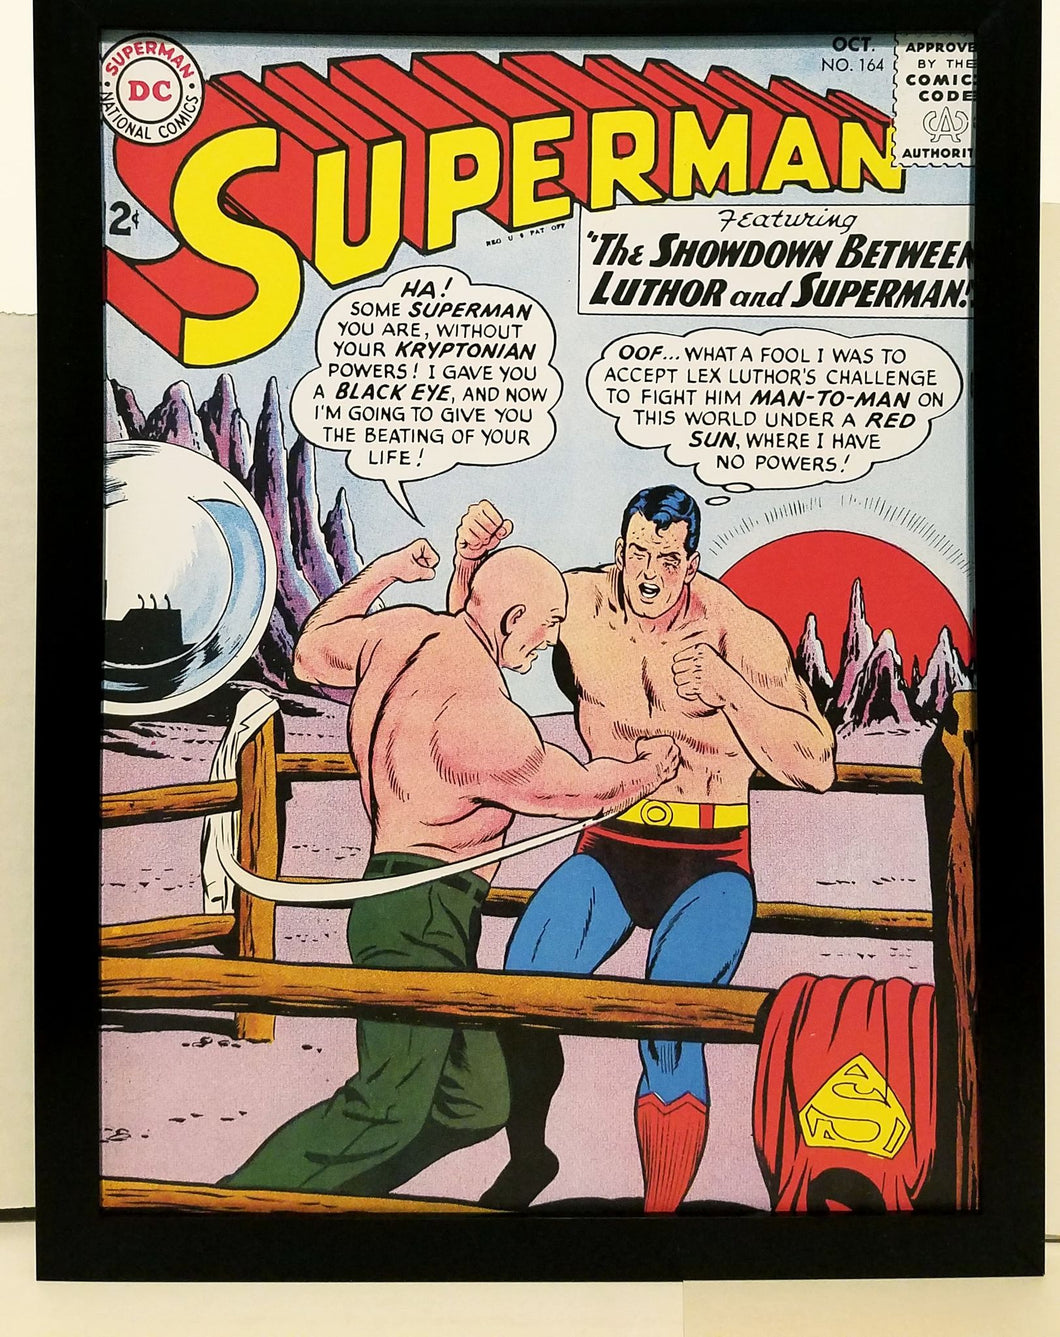 Superman #164 by Curt Swan 9x12 FRAMED Vintage 1963 DC Comics Art Print Poster